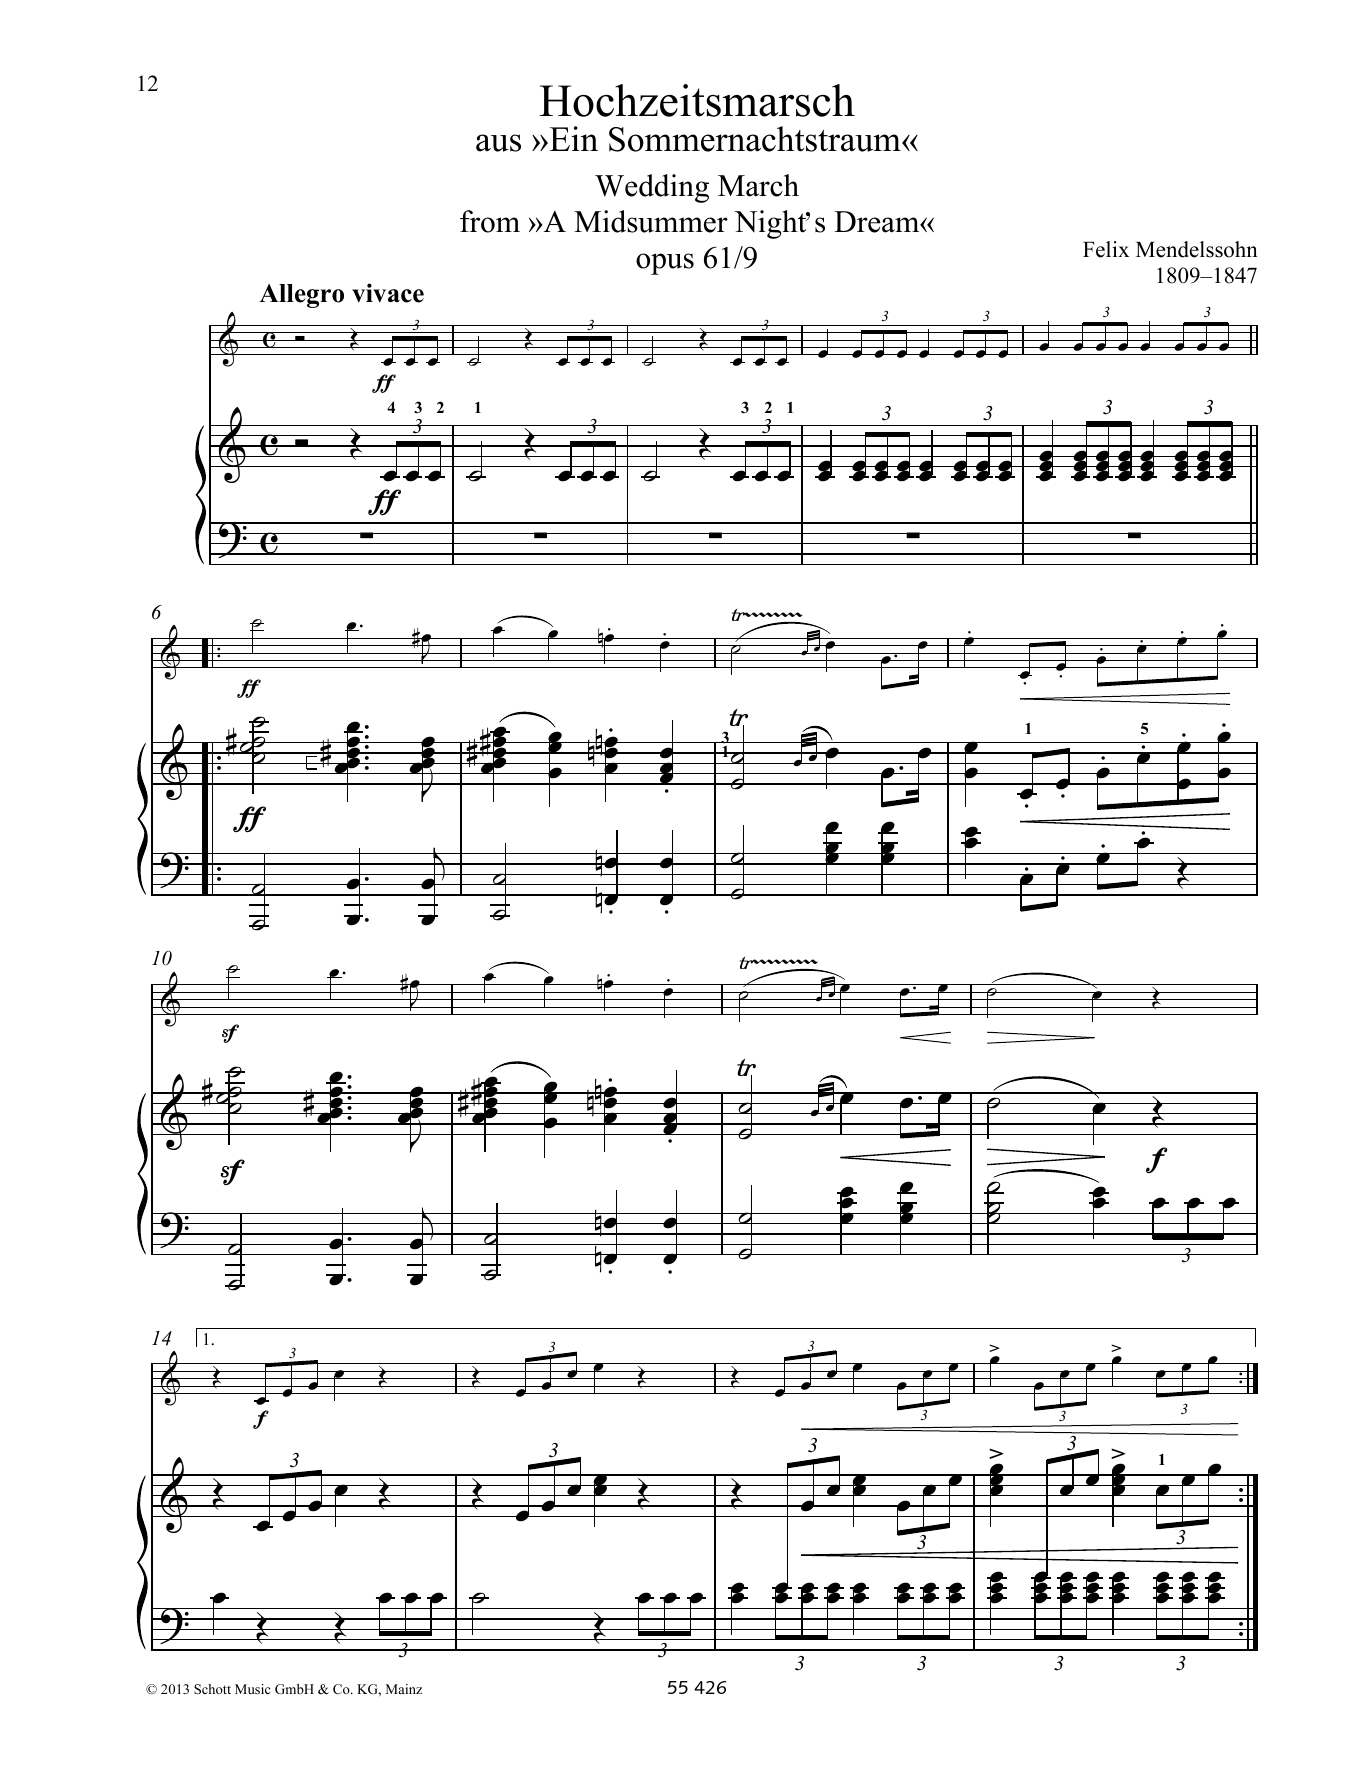 Felix Mendelssohn Bartholdy Wedding March Sheet Music Notes & Chords for String Solo - Download or Print PDF